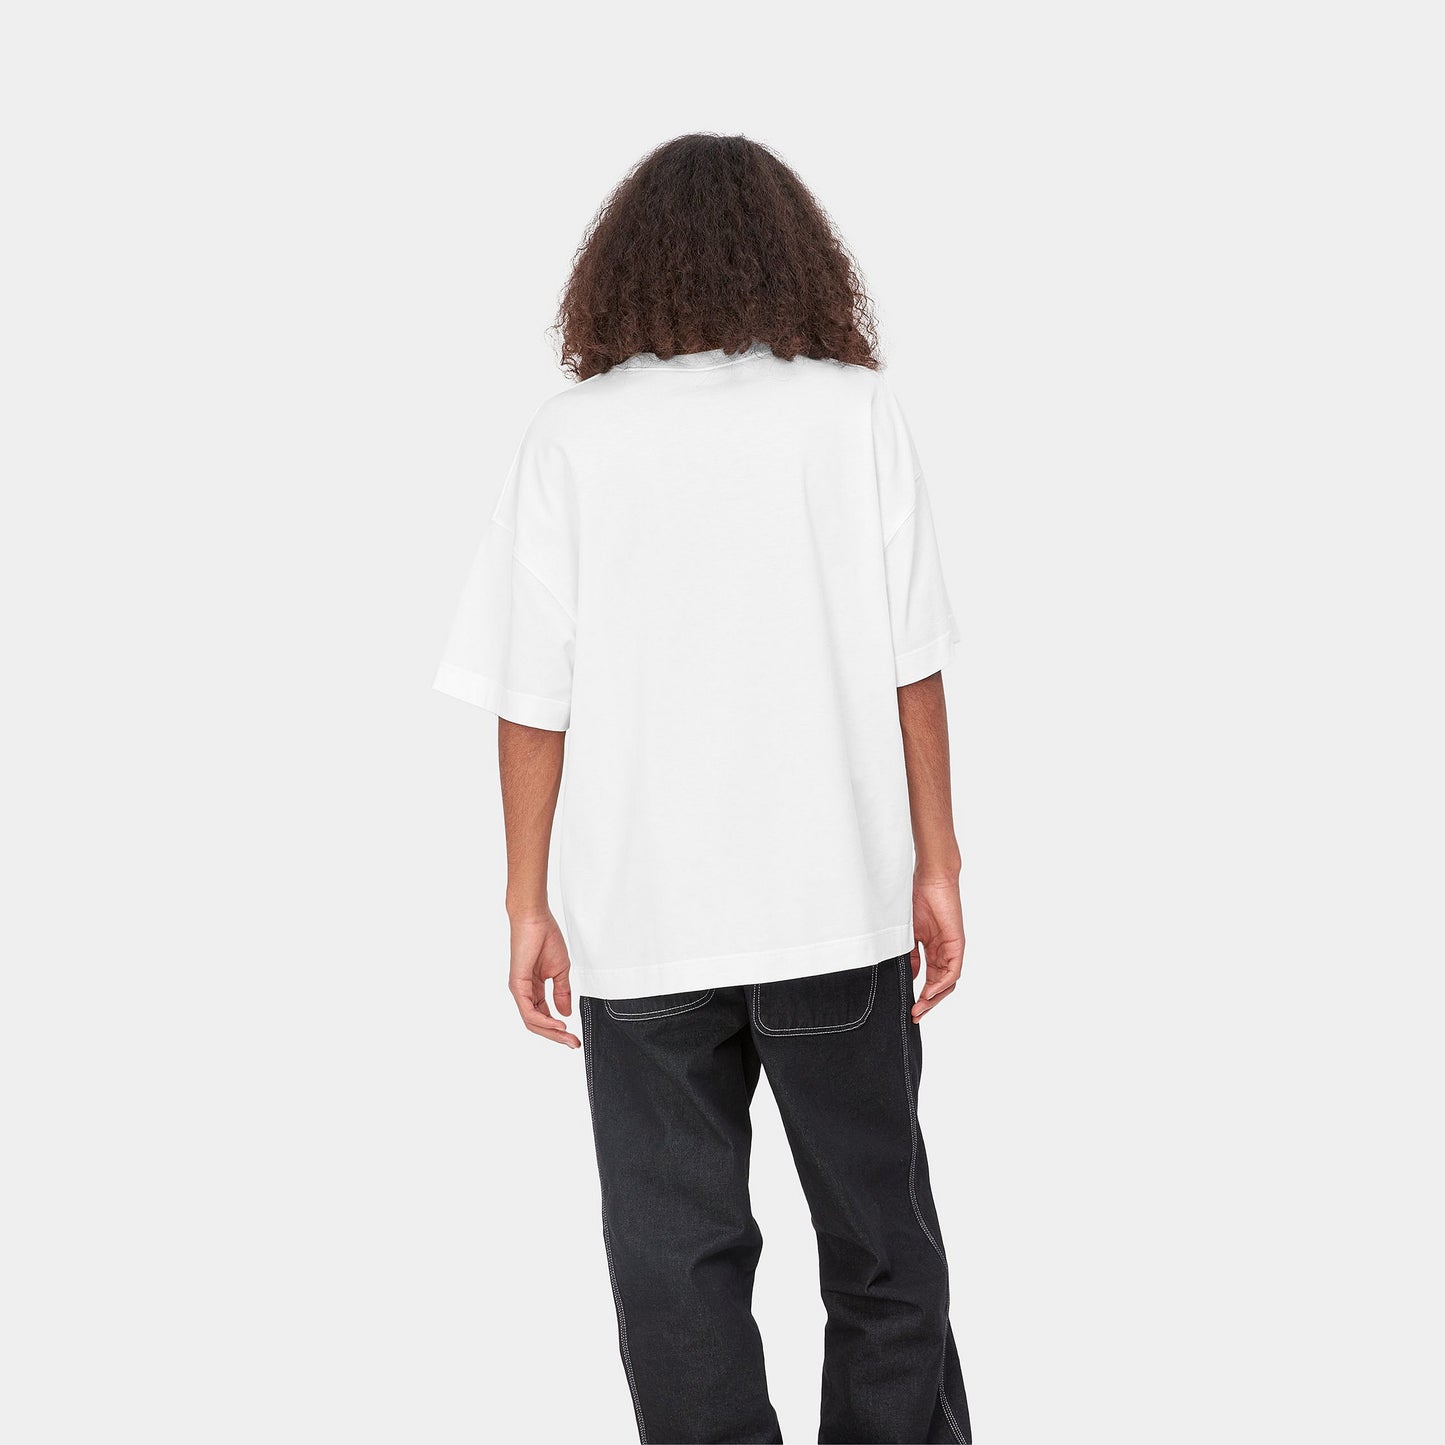 CARHARTT WIP S/S Link Script T-Shirt - White/Black